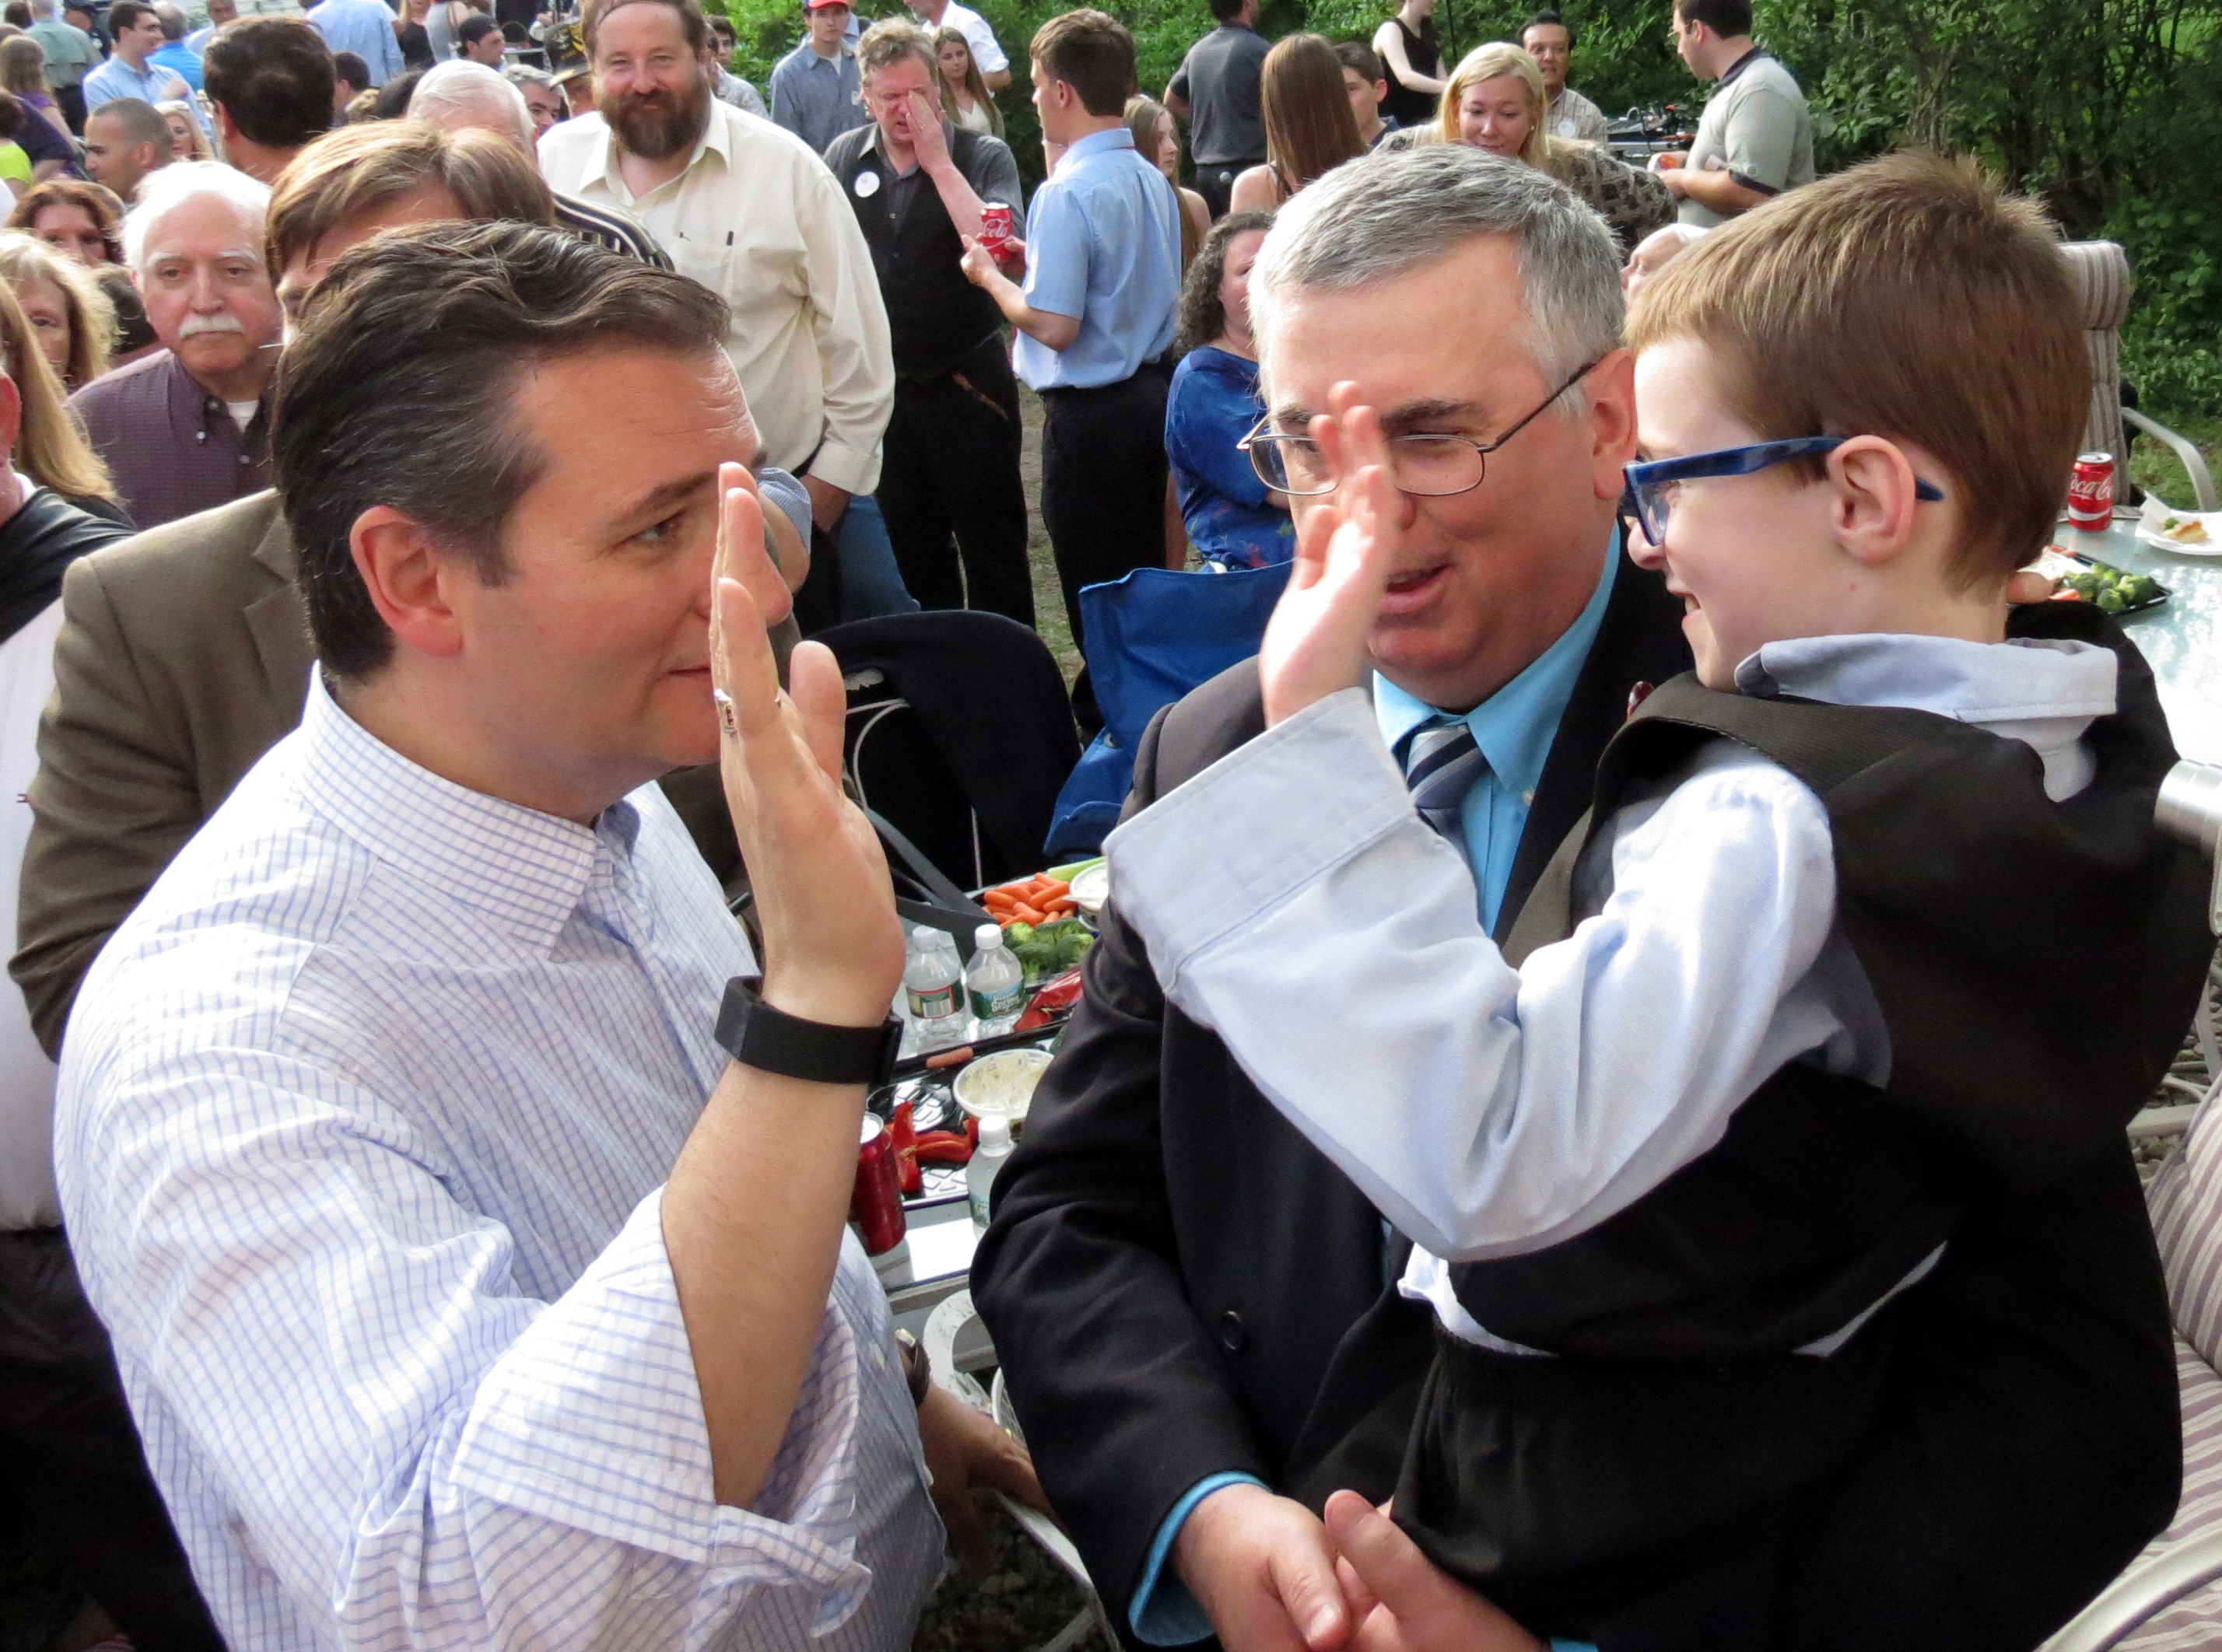 VIDEO: Texas Senator Ted Cruz Presidential Campaign Stop in Andover, MA